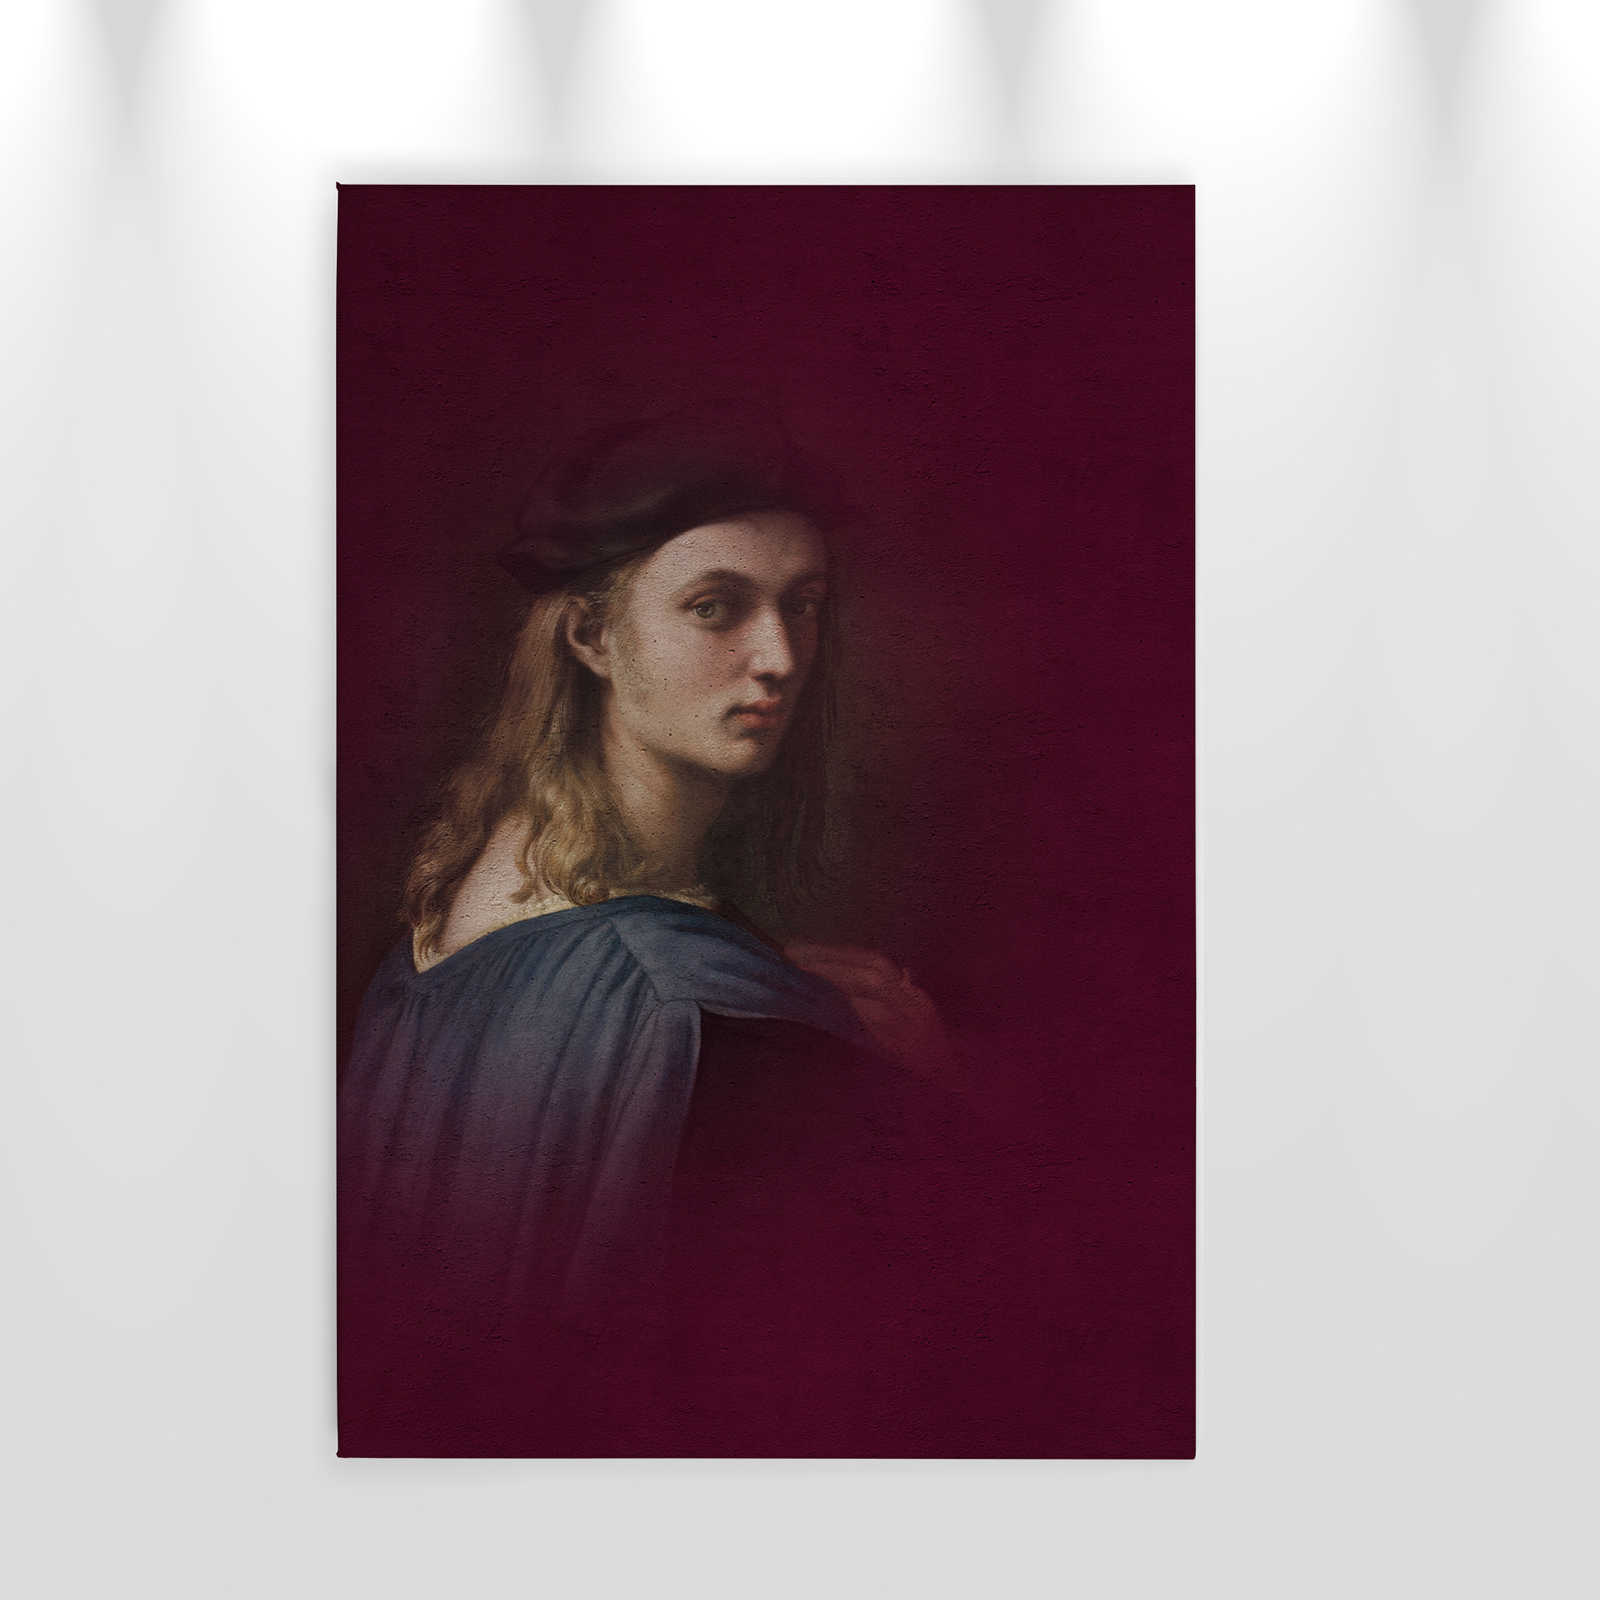             Leinwandbild Klassik Portrait junger Mann – 0,60 m x 0,90 m
        